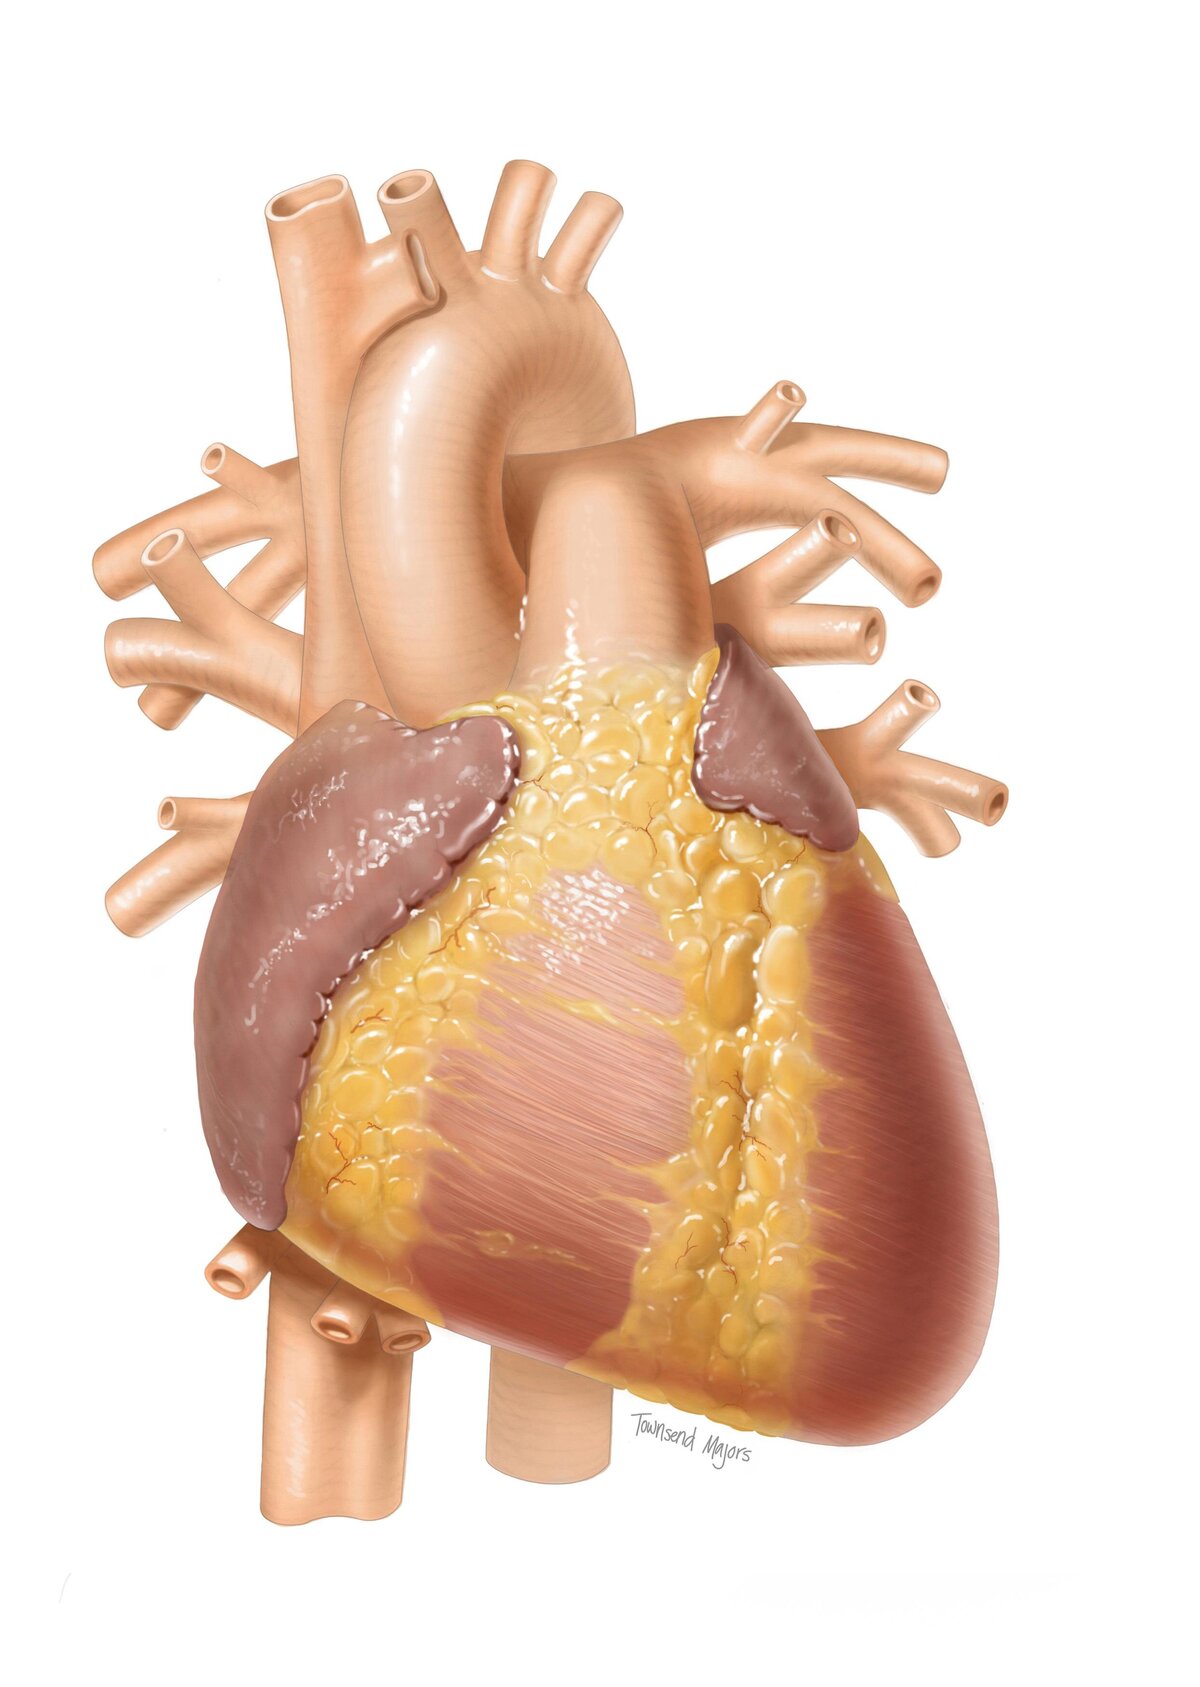 townsend-majors-anatomical-heart